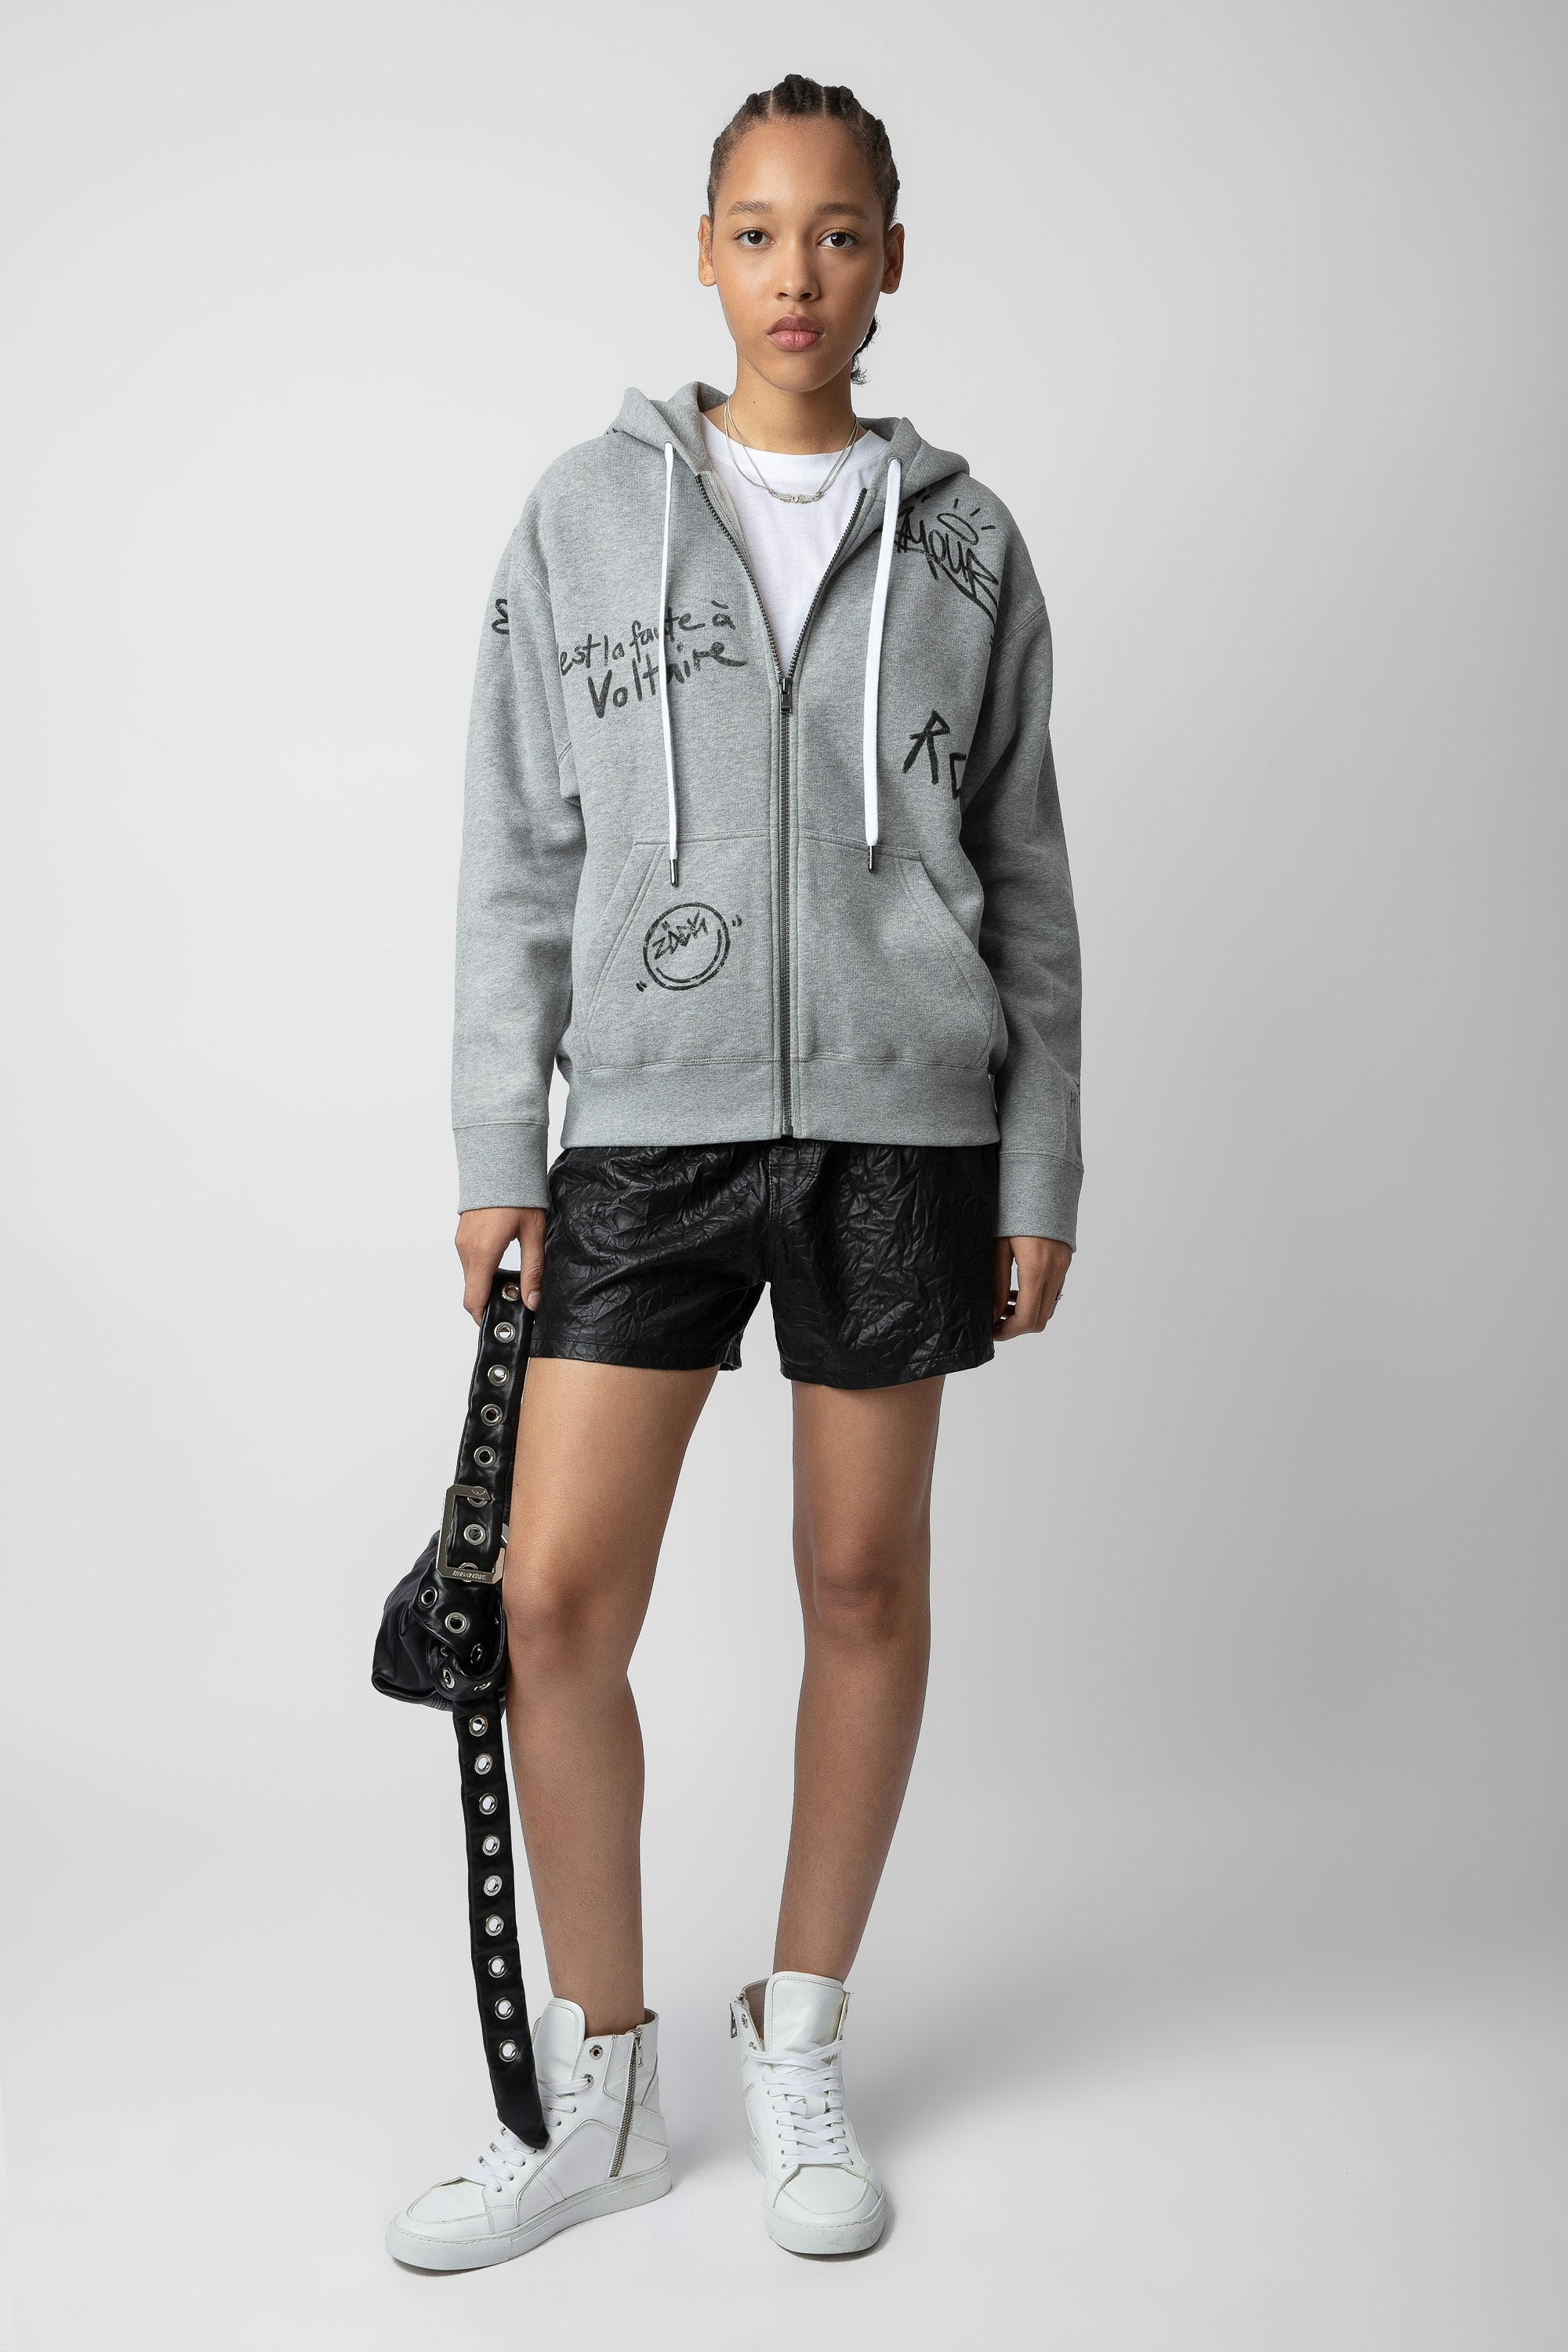 Spencer Diamanté Hoodie - Women’s marl grey zip-up hoodie with Zadig&Voltaire manifesto tags print.